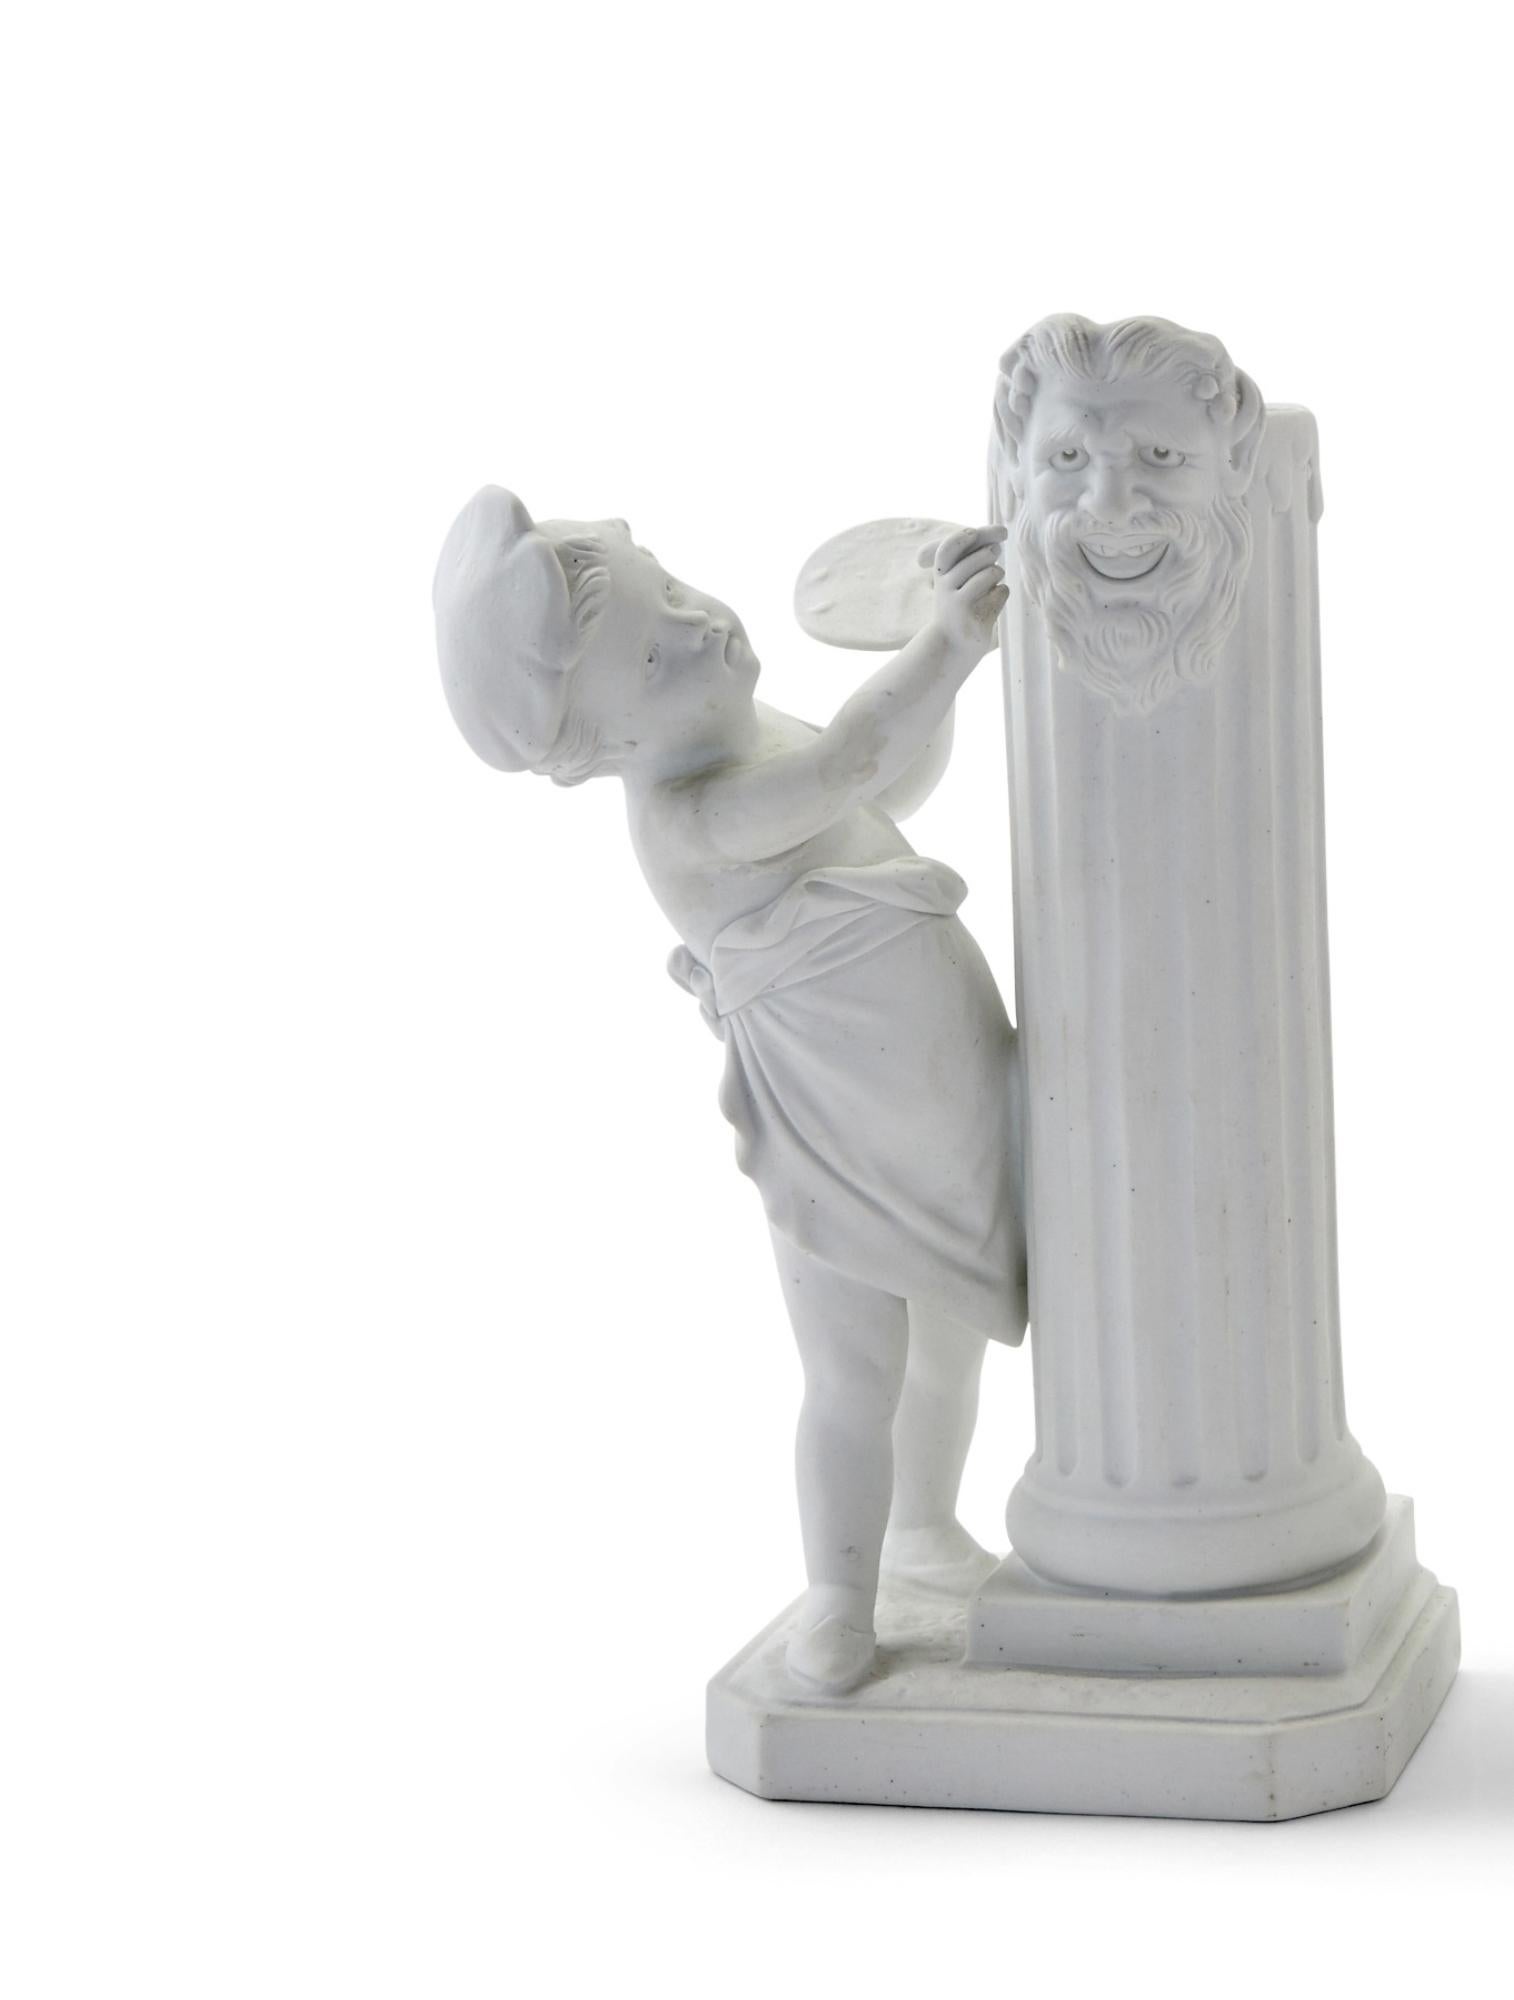 20th Century Sevres Style Bisque Porcelain Decorative Figural Pair Vases For Sale